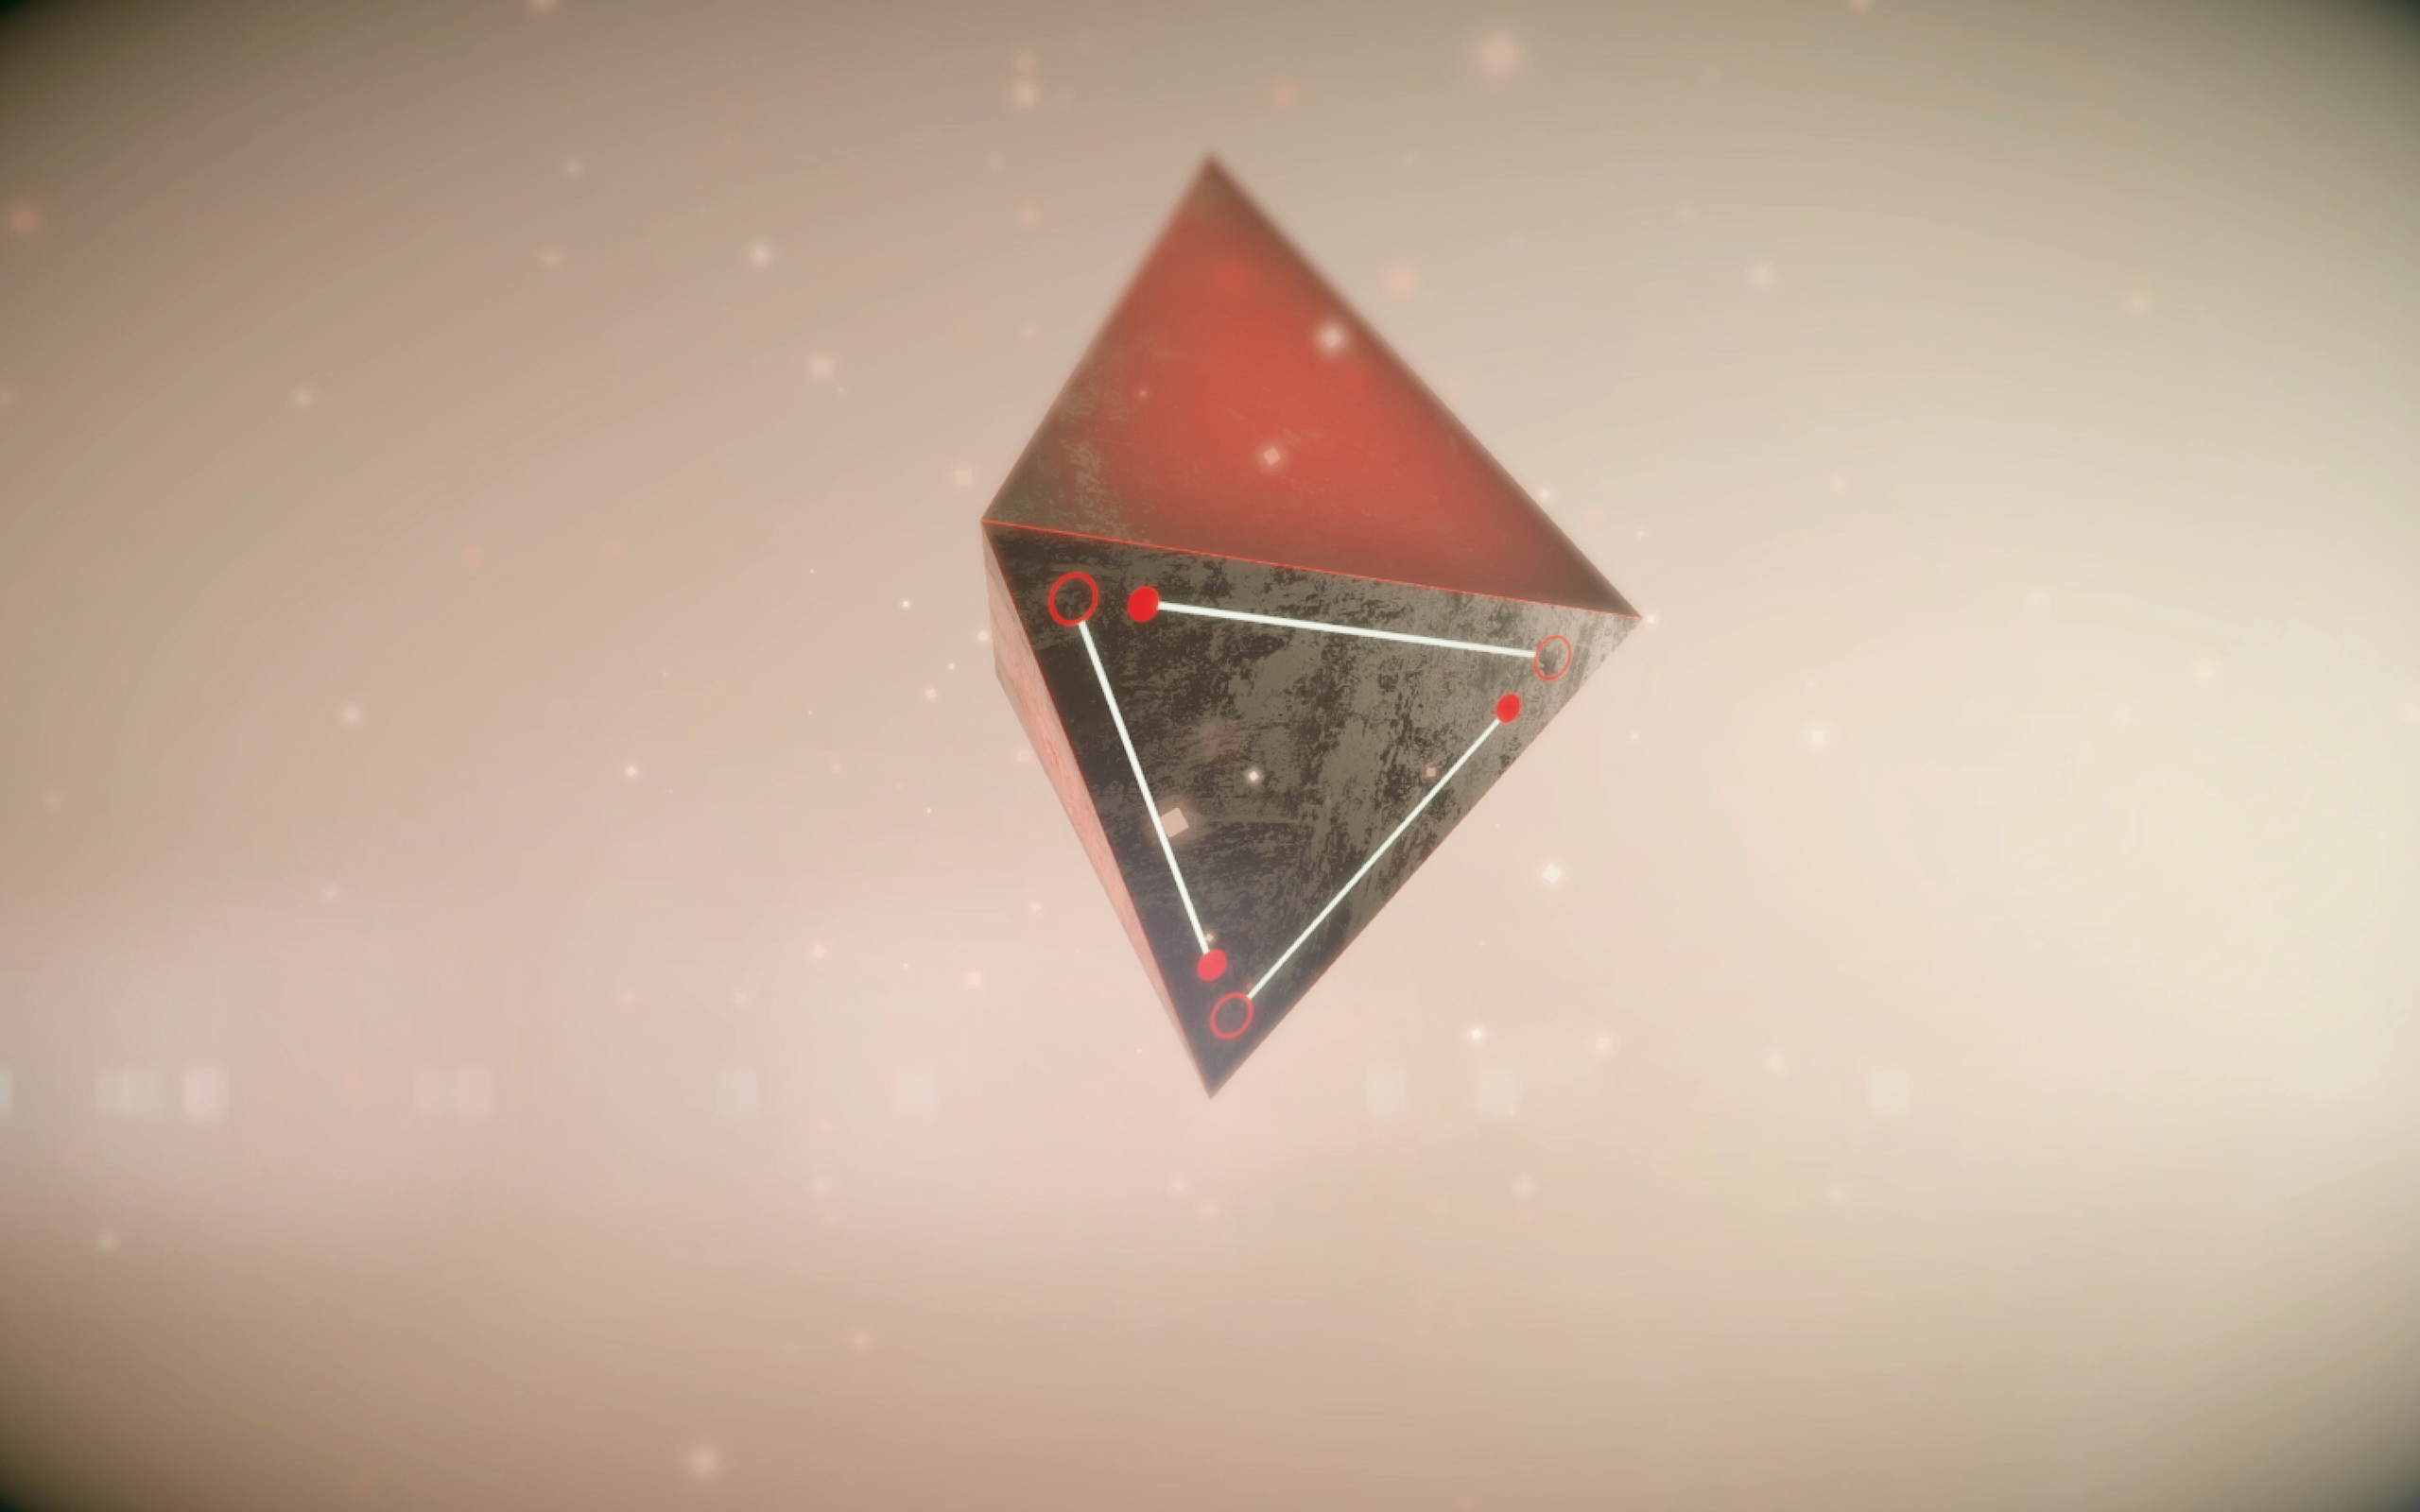 _PRISM screenshot game